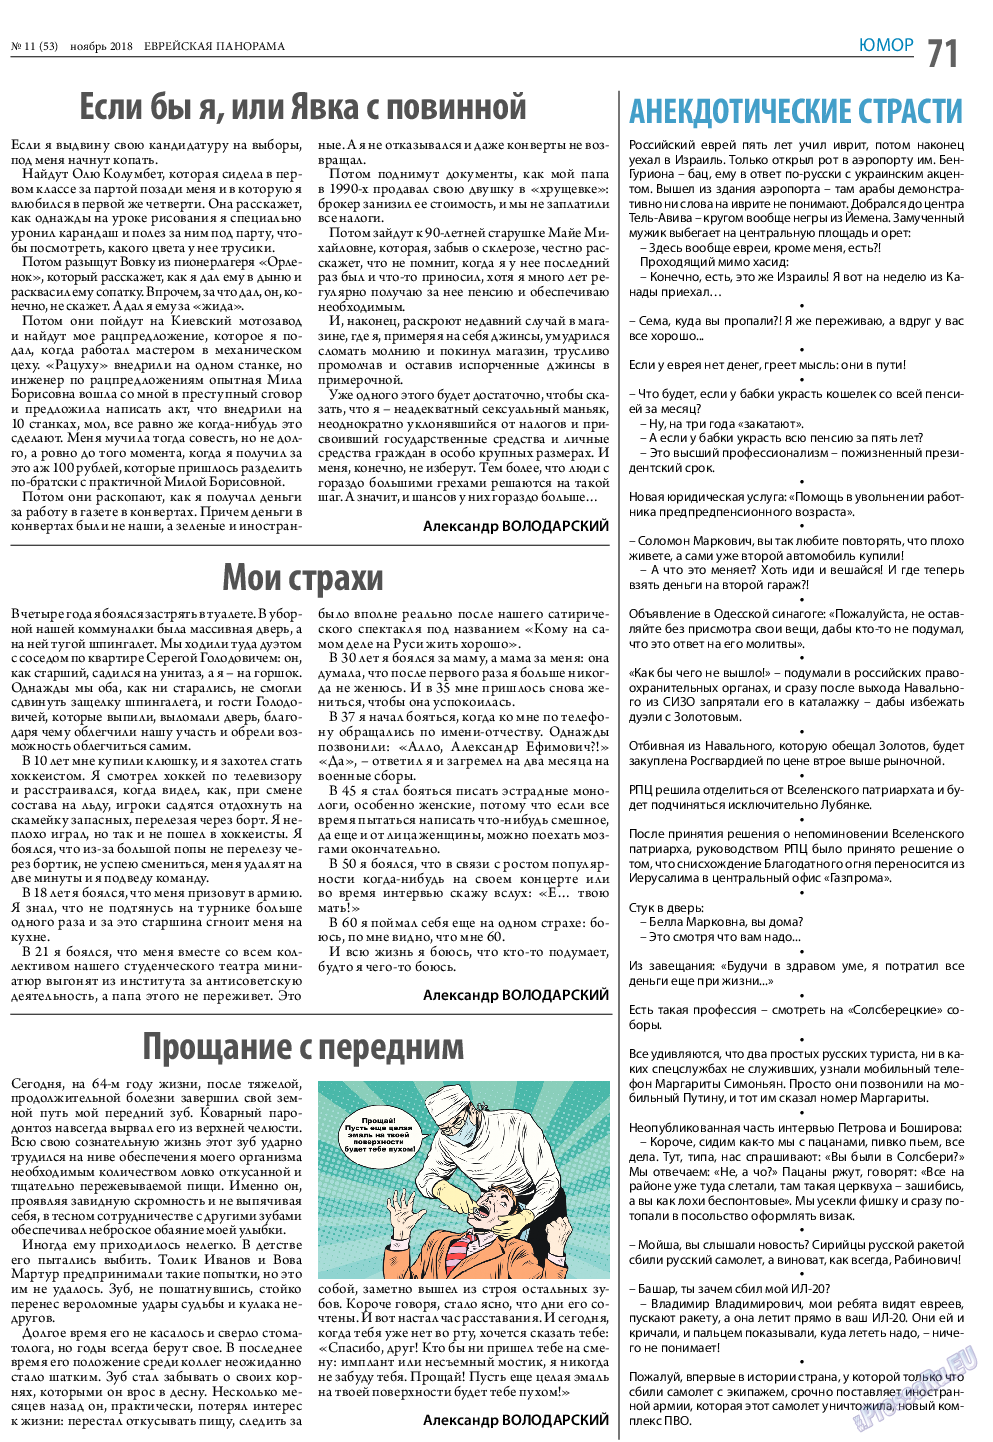 Еврейская панорама, газета. 2018 №11 стр.71